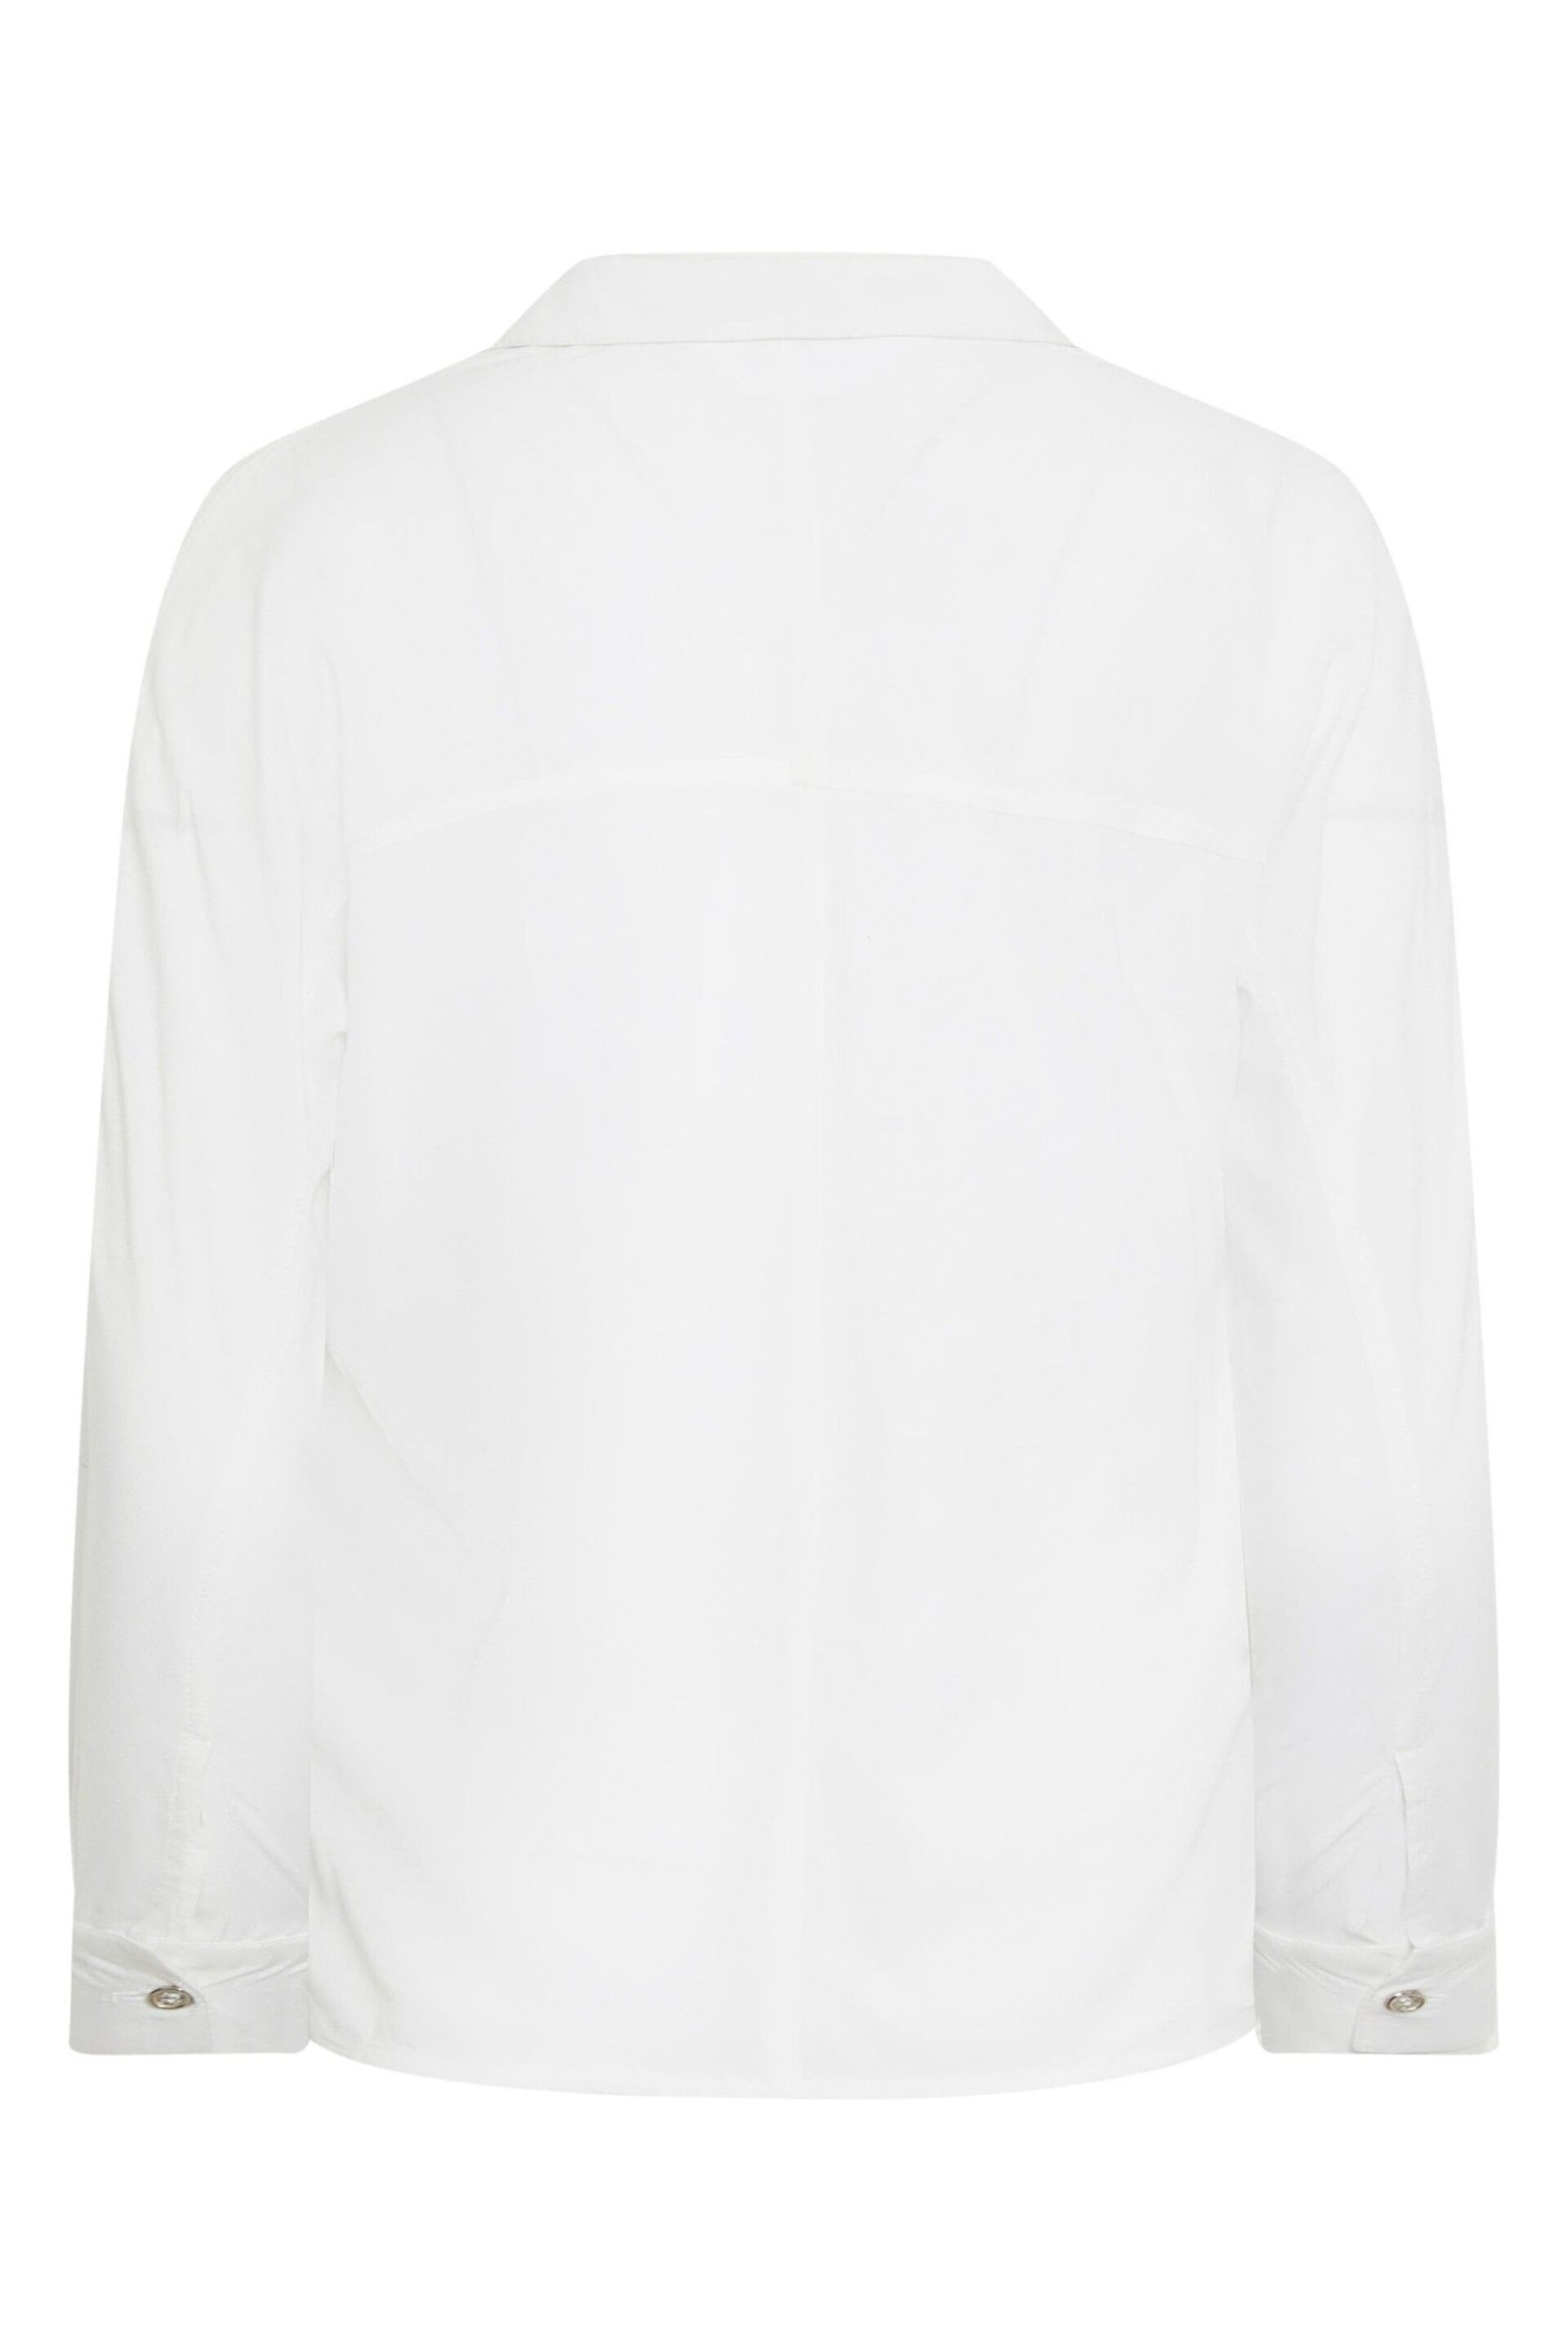 PixieGirl Petite White Longsleeve Viscose Shirt - Image 5 of 5